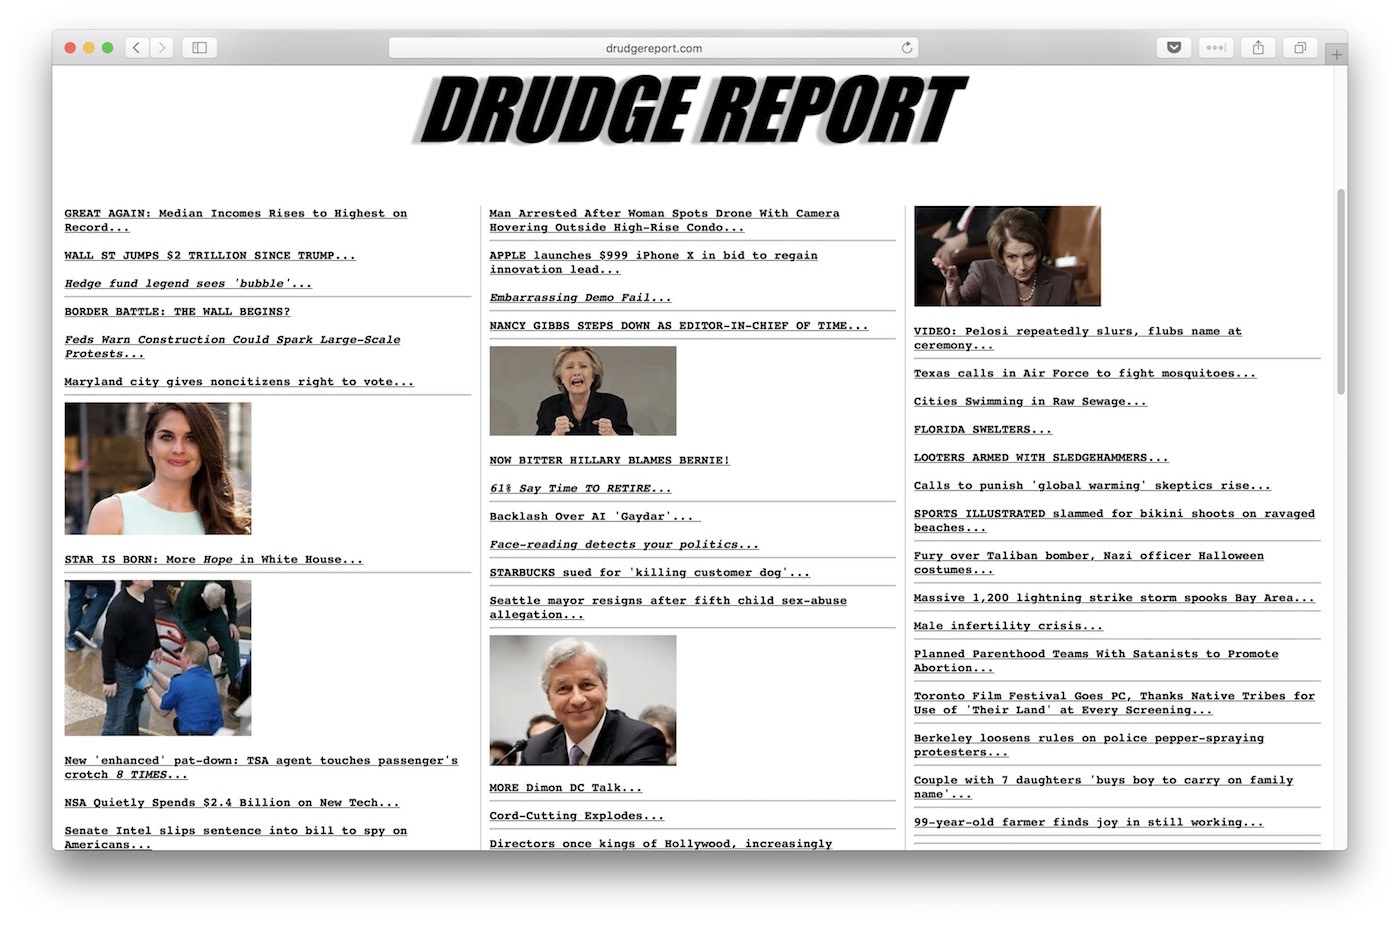 The Drudge Report